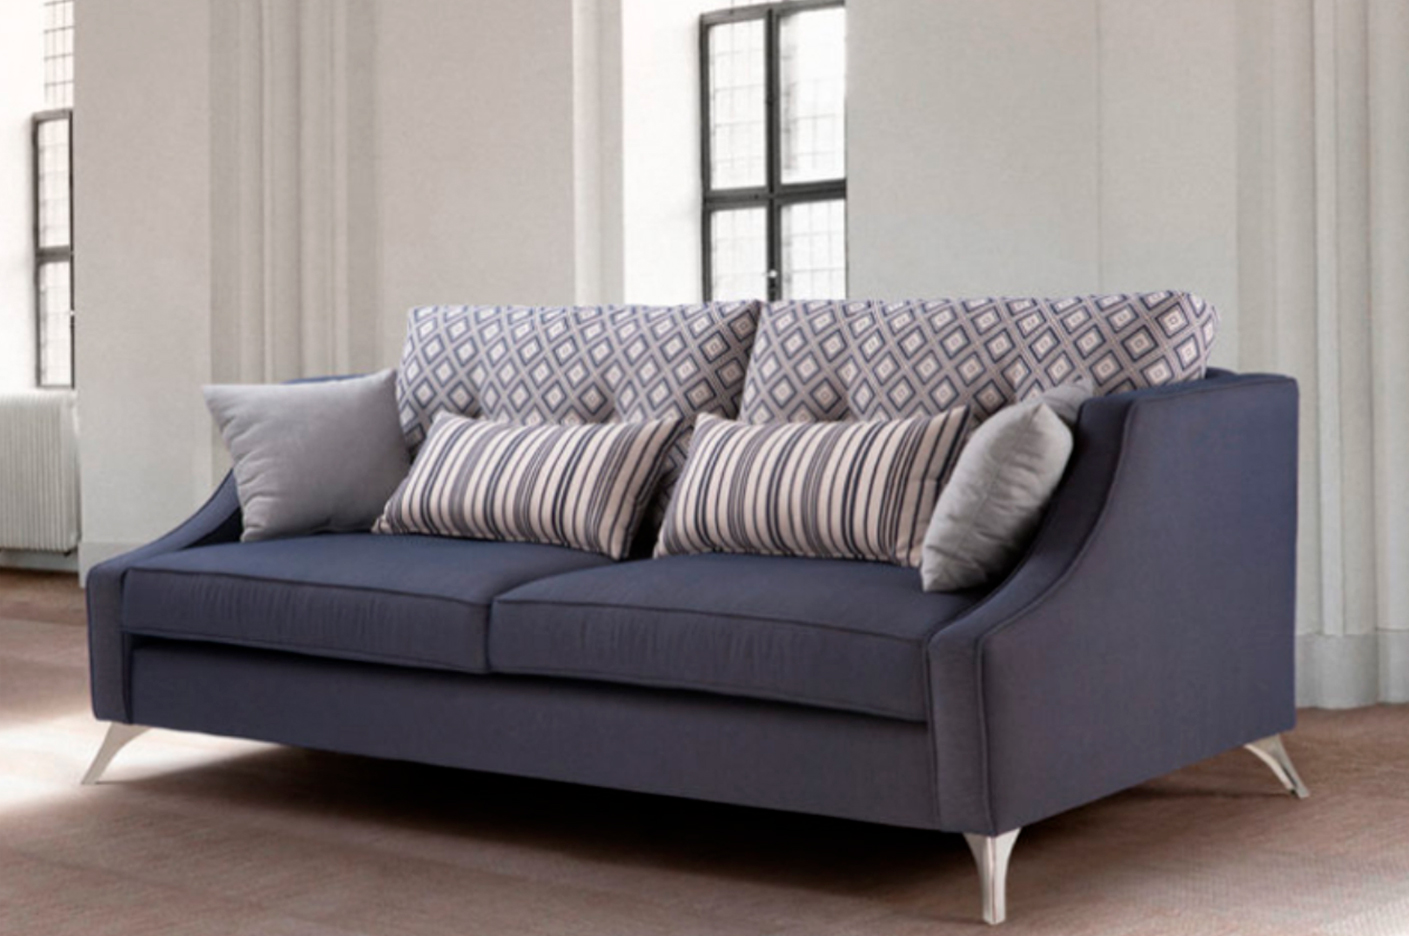 sofa-clasico_Curve_Muebles-toscana